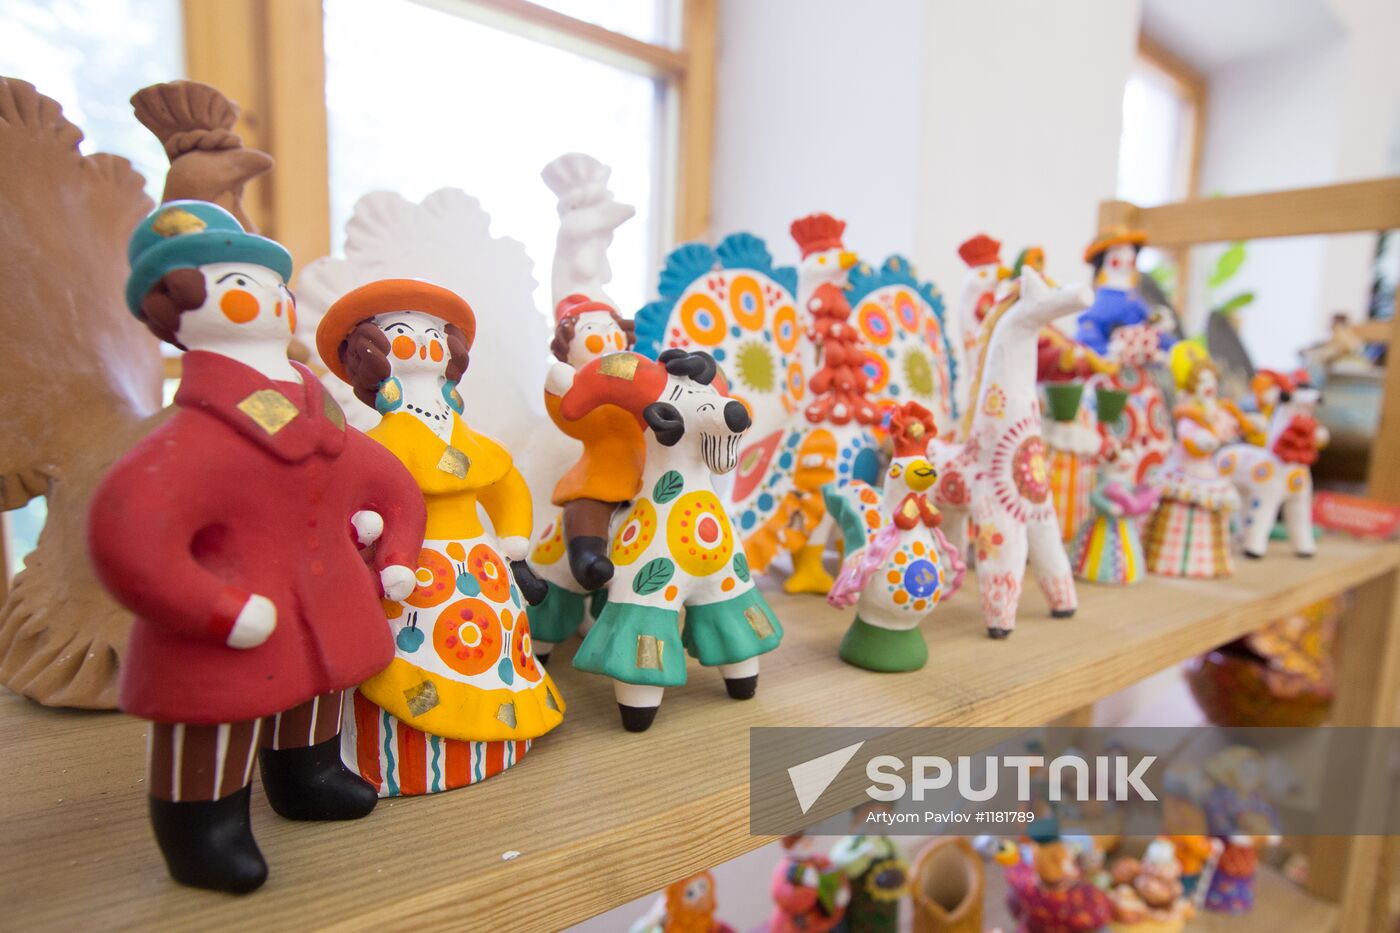 The Museum of Russian Toy in Izmailovsky Kremlin